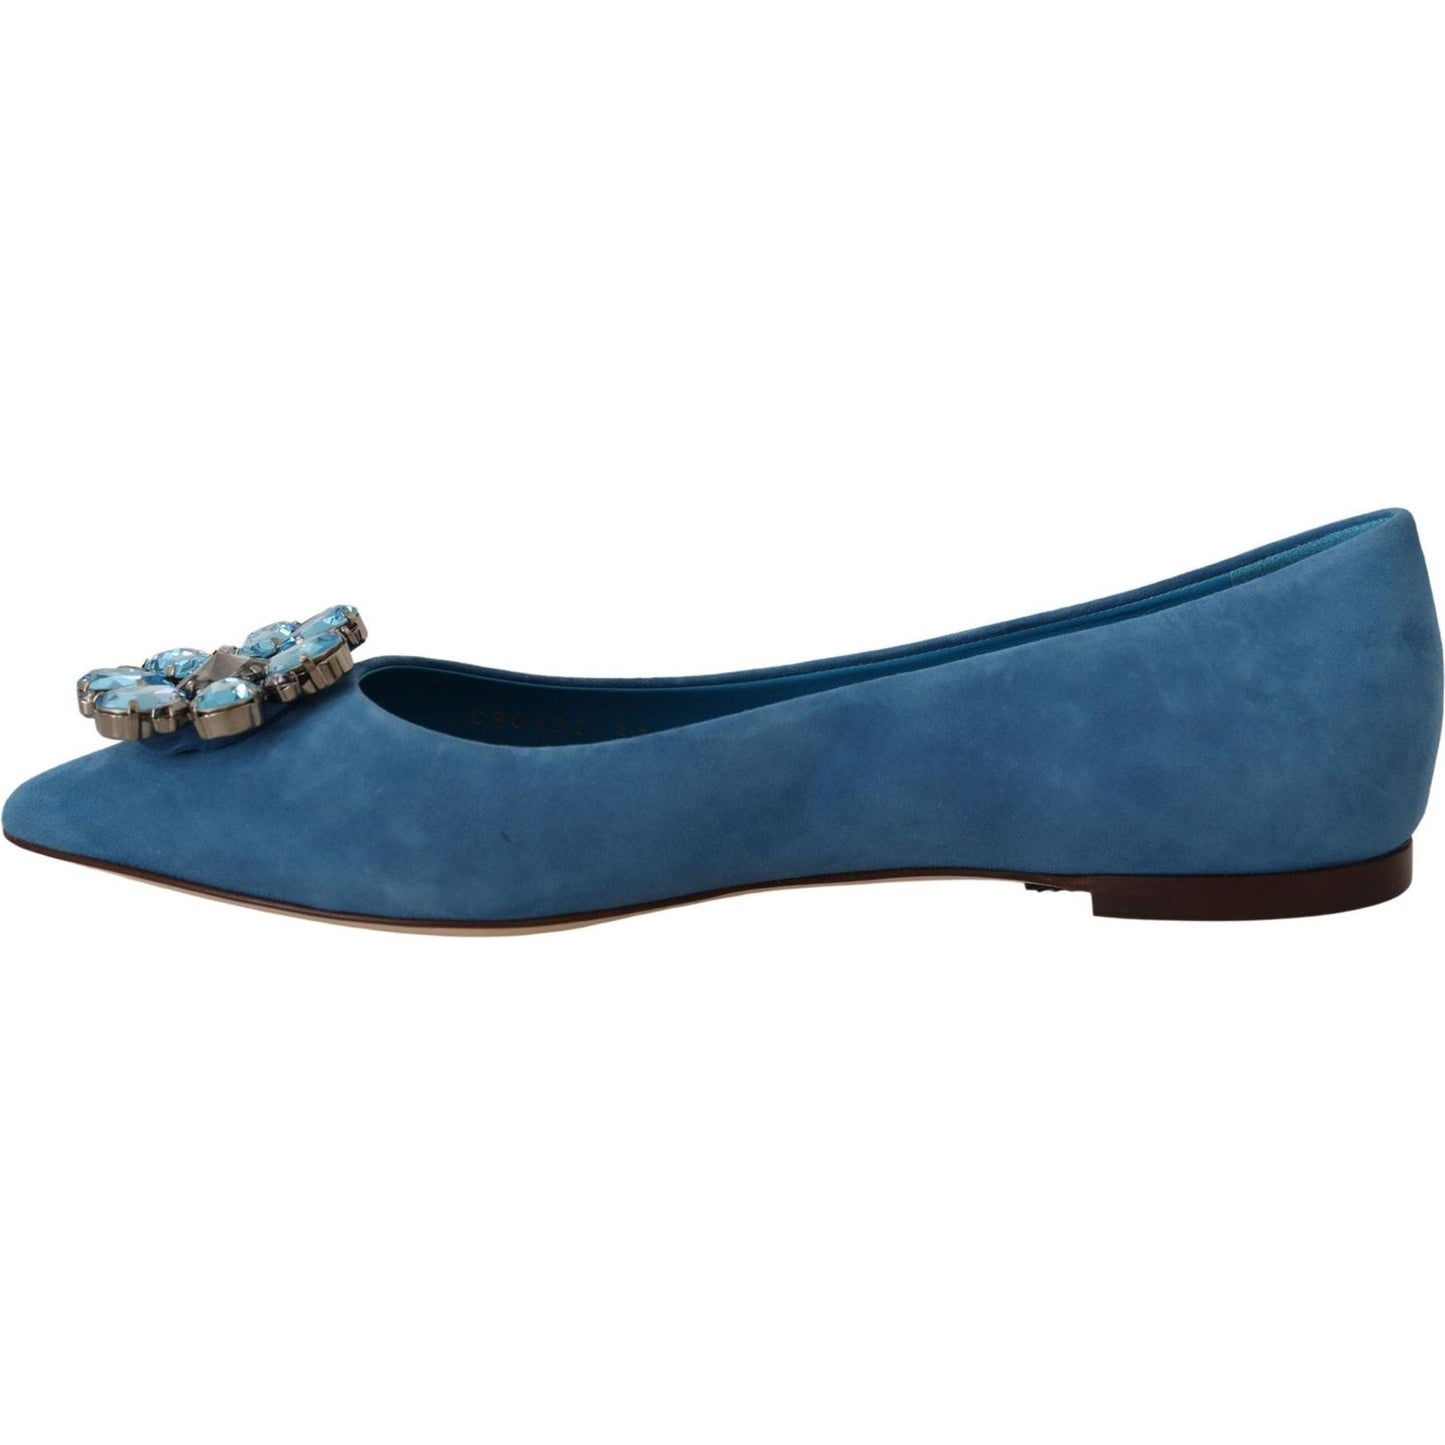 Dolce & Gabbana Elegant Crystal-Embellished Suede Flats blue-suede-crystals-loafers-flats-shoes